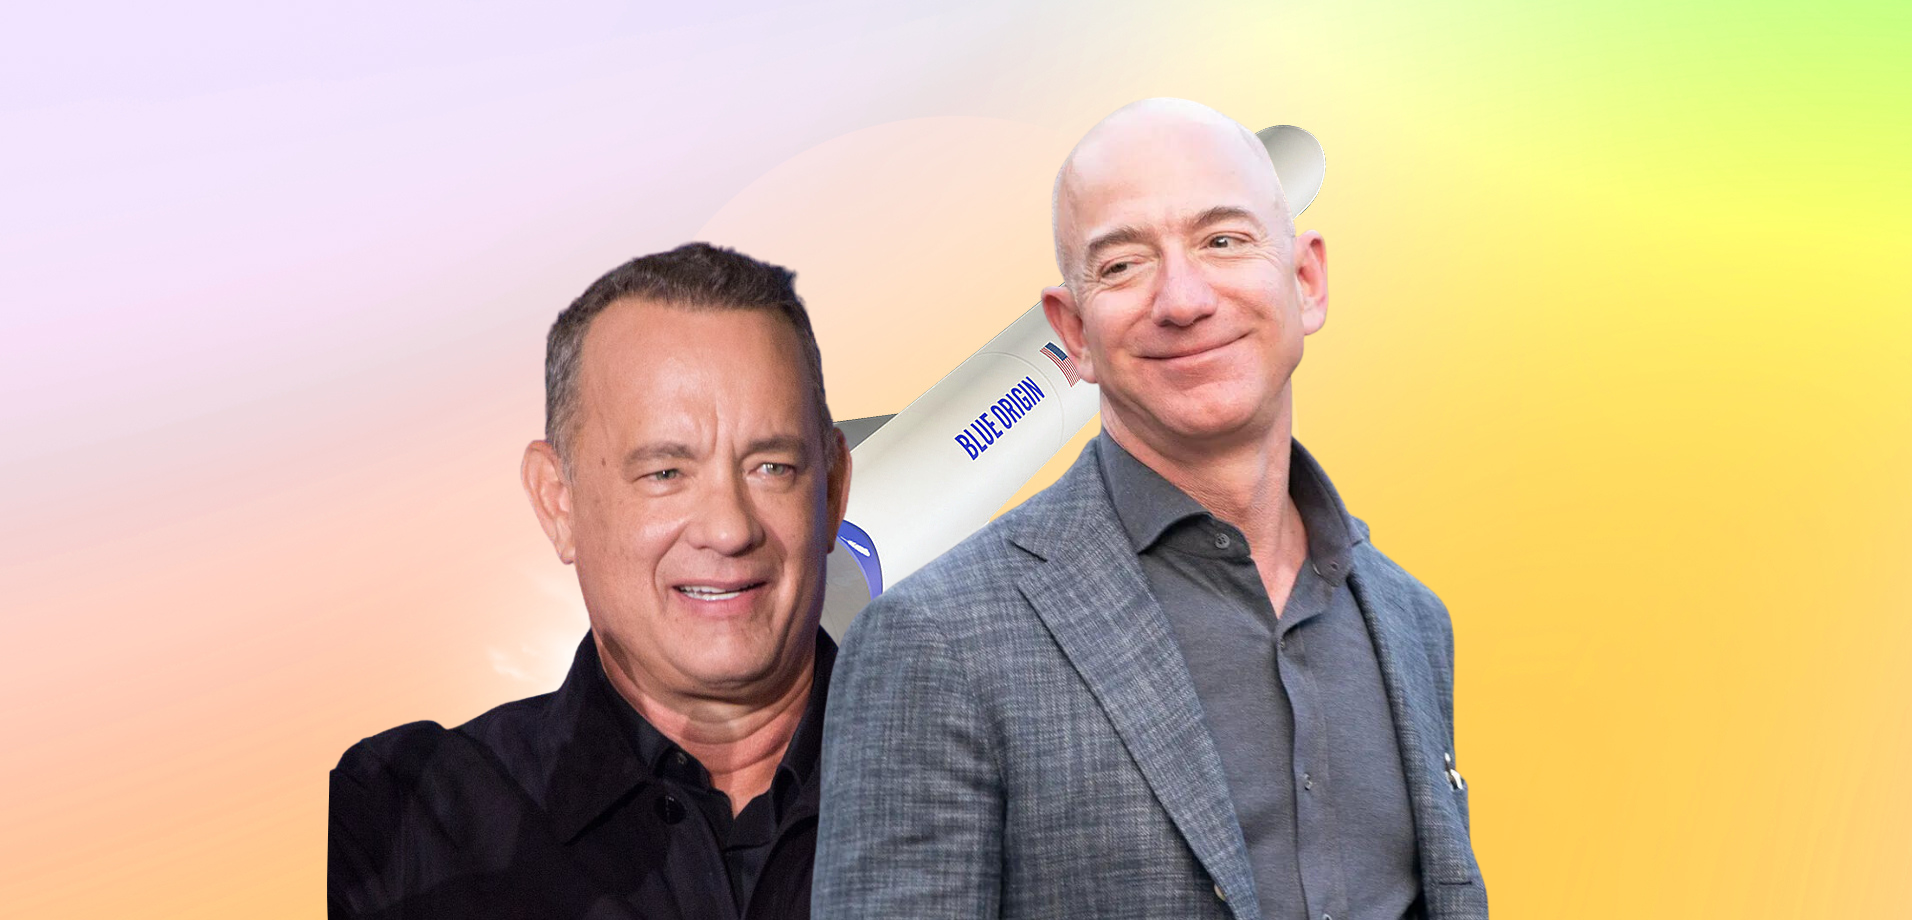 Tom Hanks Turns Down Jeff Bezos’ Offer to Join Blue Origin Space Tourism Flight